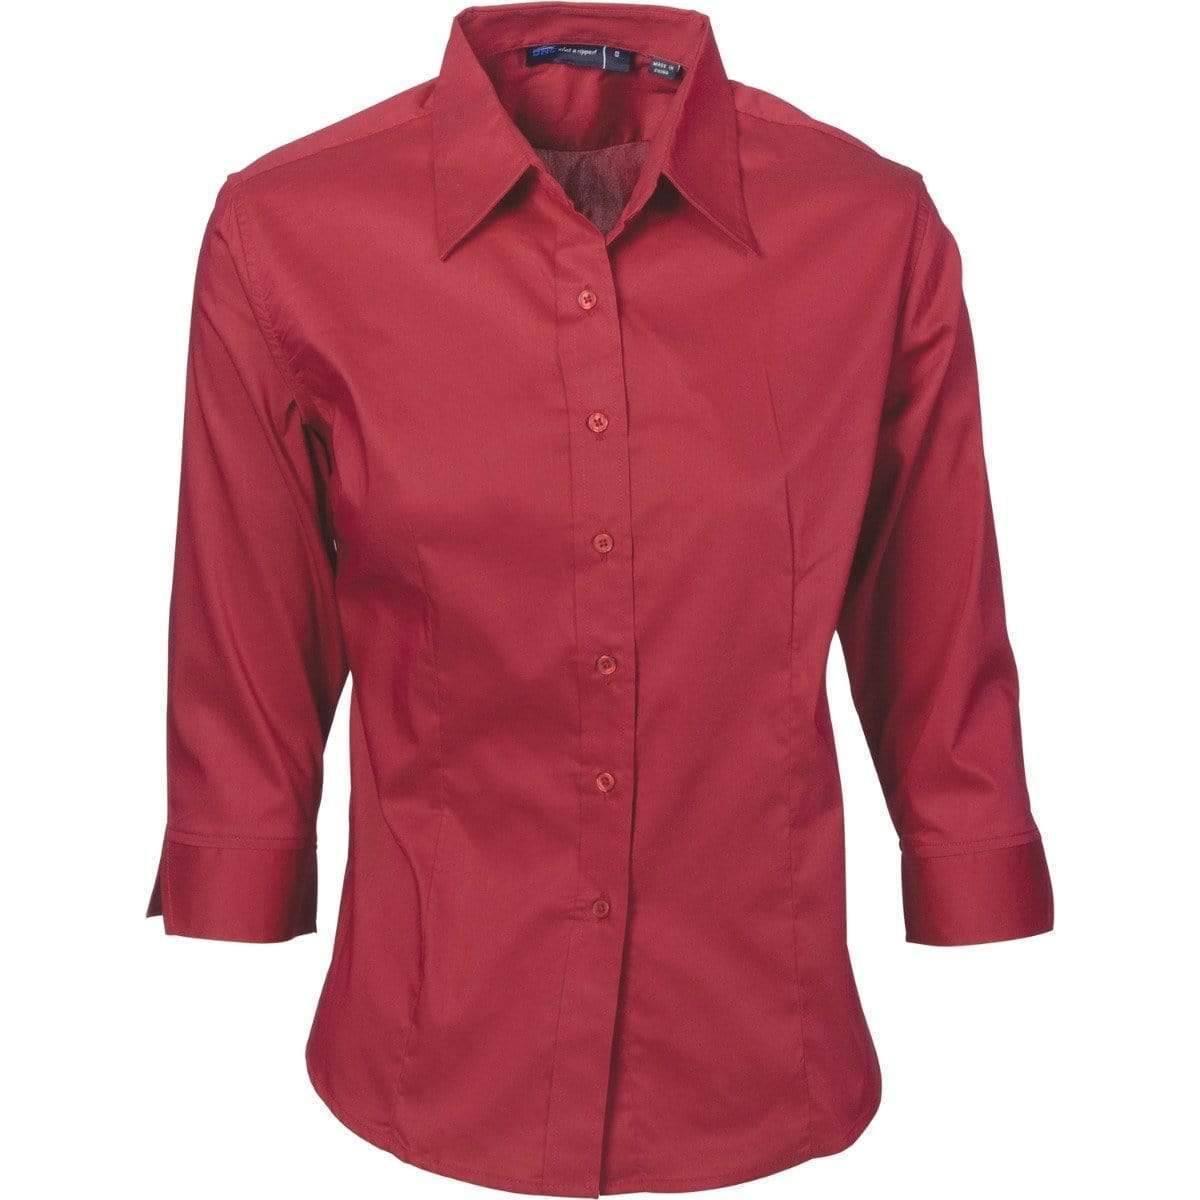 Dnc Workwear Ladies Premier Stretch Poplin 3/4 Sleeve Business Shirt - 4232 Corporate Wear DNC Workwear Cherry 6 